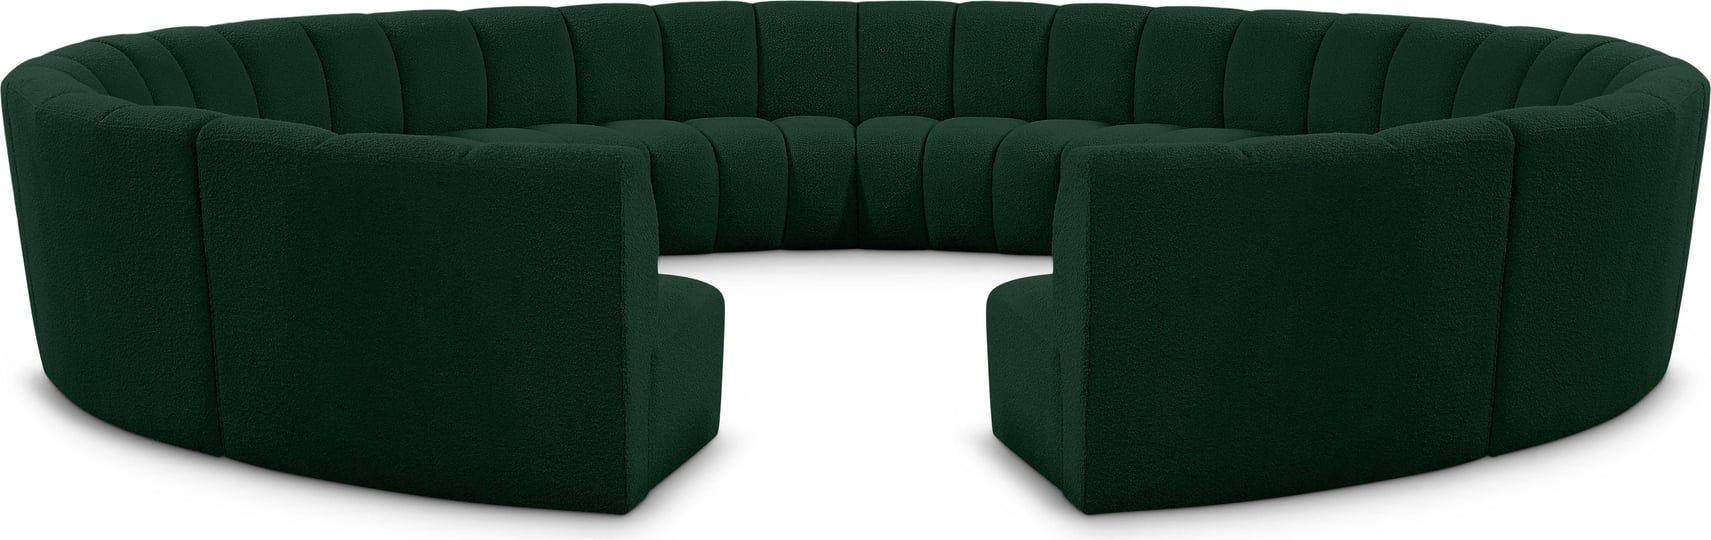 meridian-furniture-infinity-green-boucle-fabric-12pc-modular-sectional-1